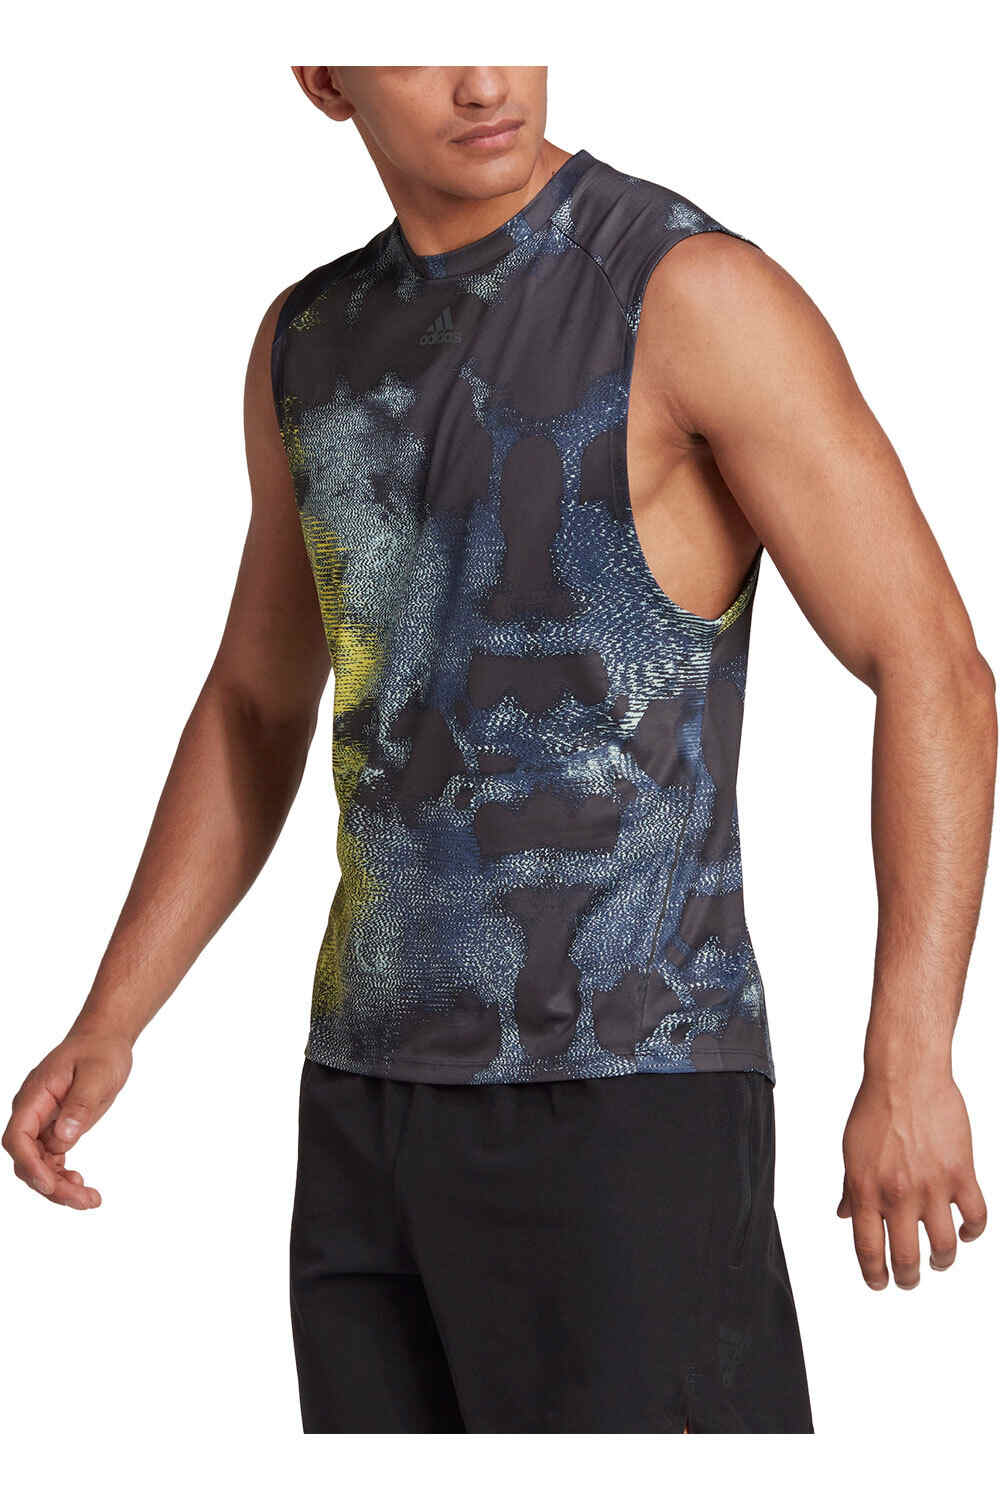 adidas camiseta fitness hombre HIIT Allover Print Training vista frontal